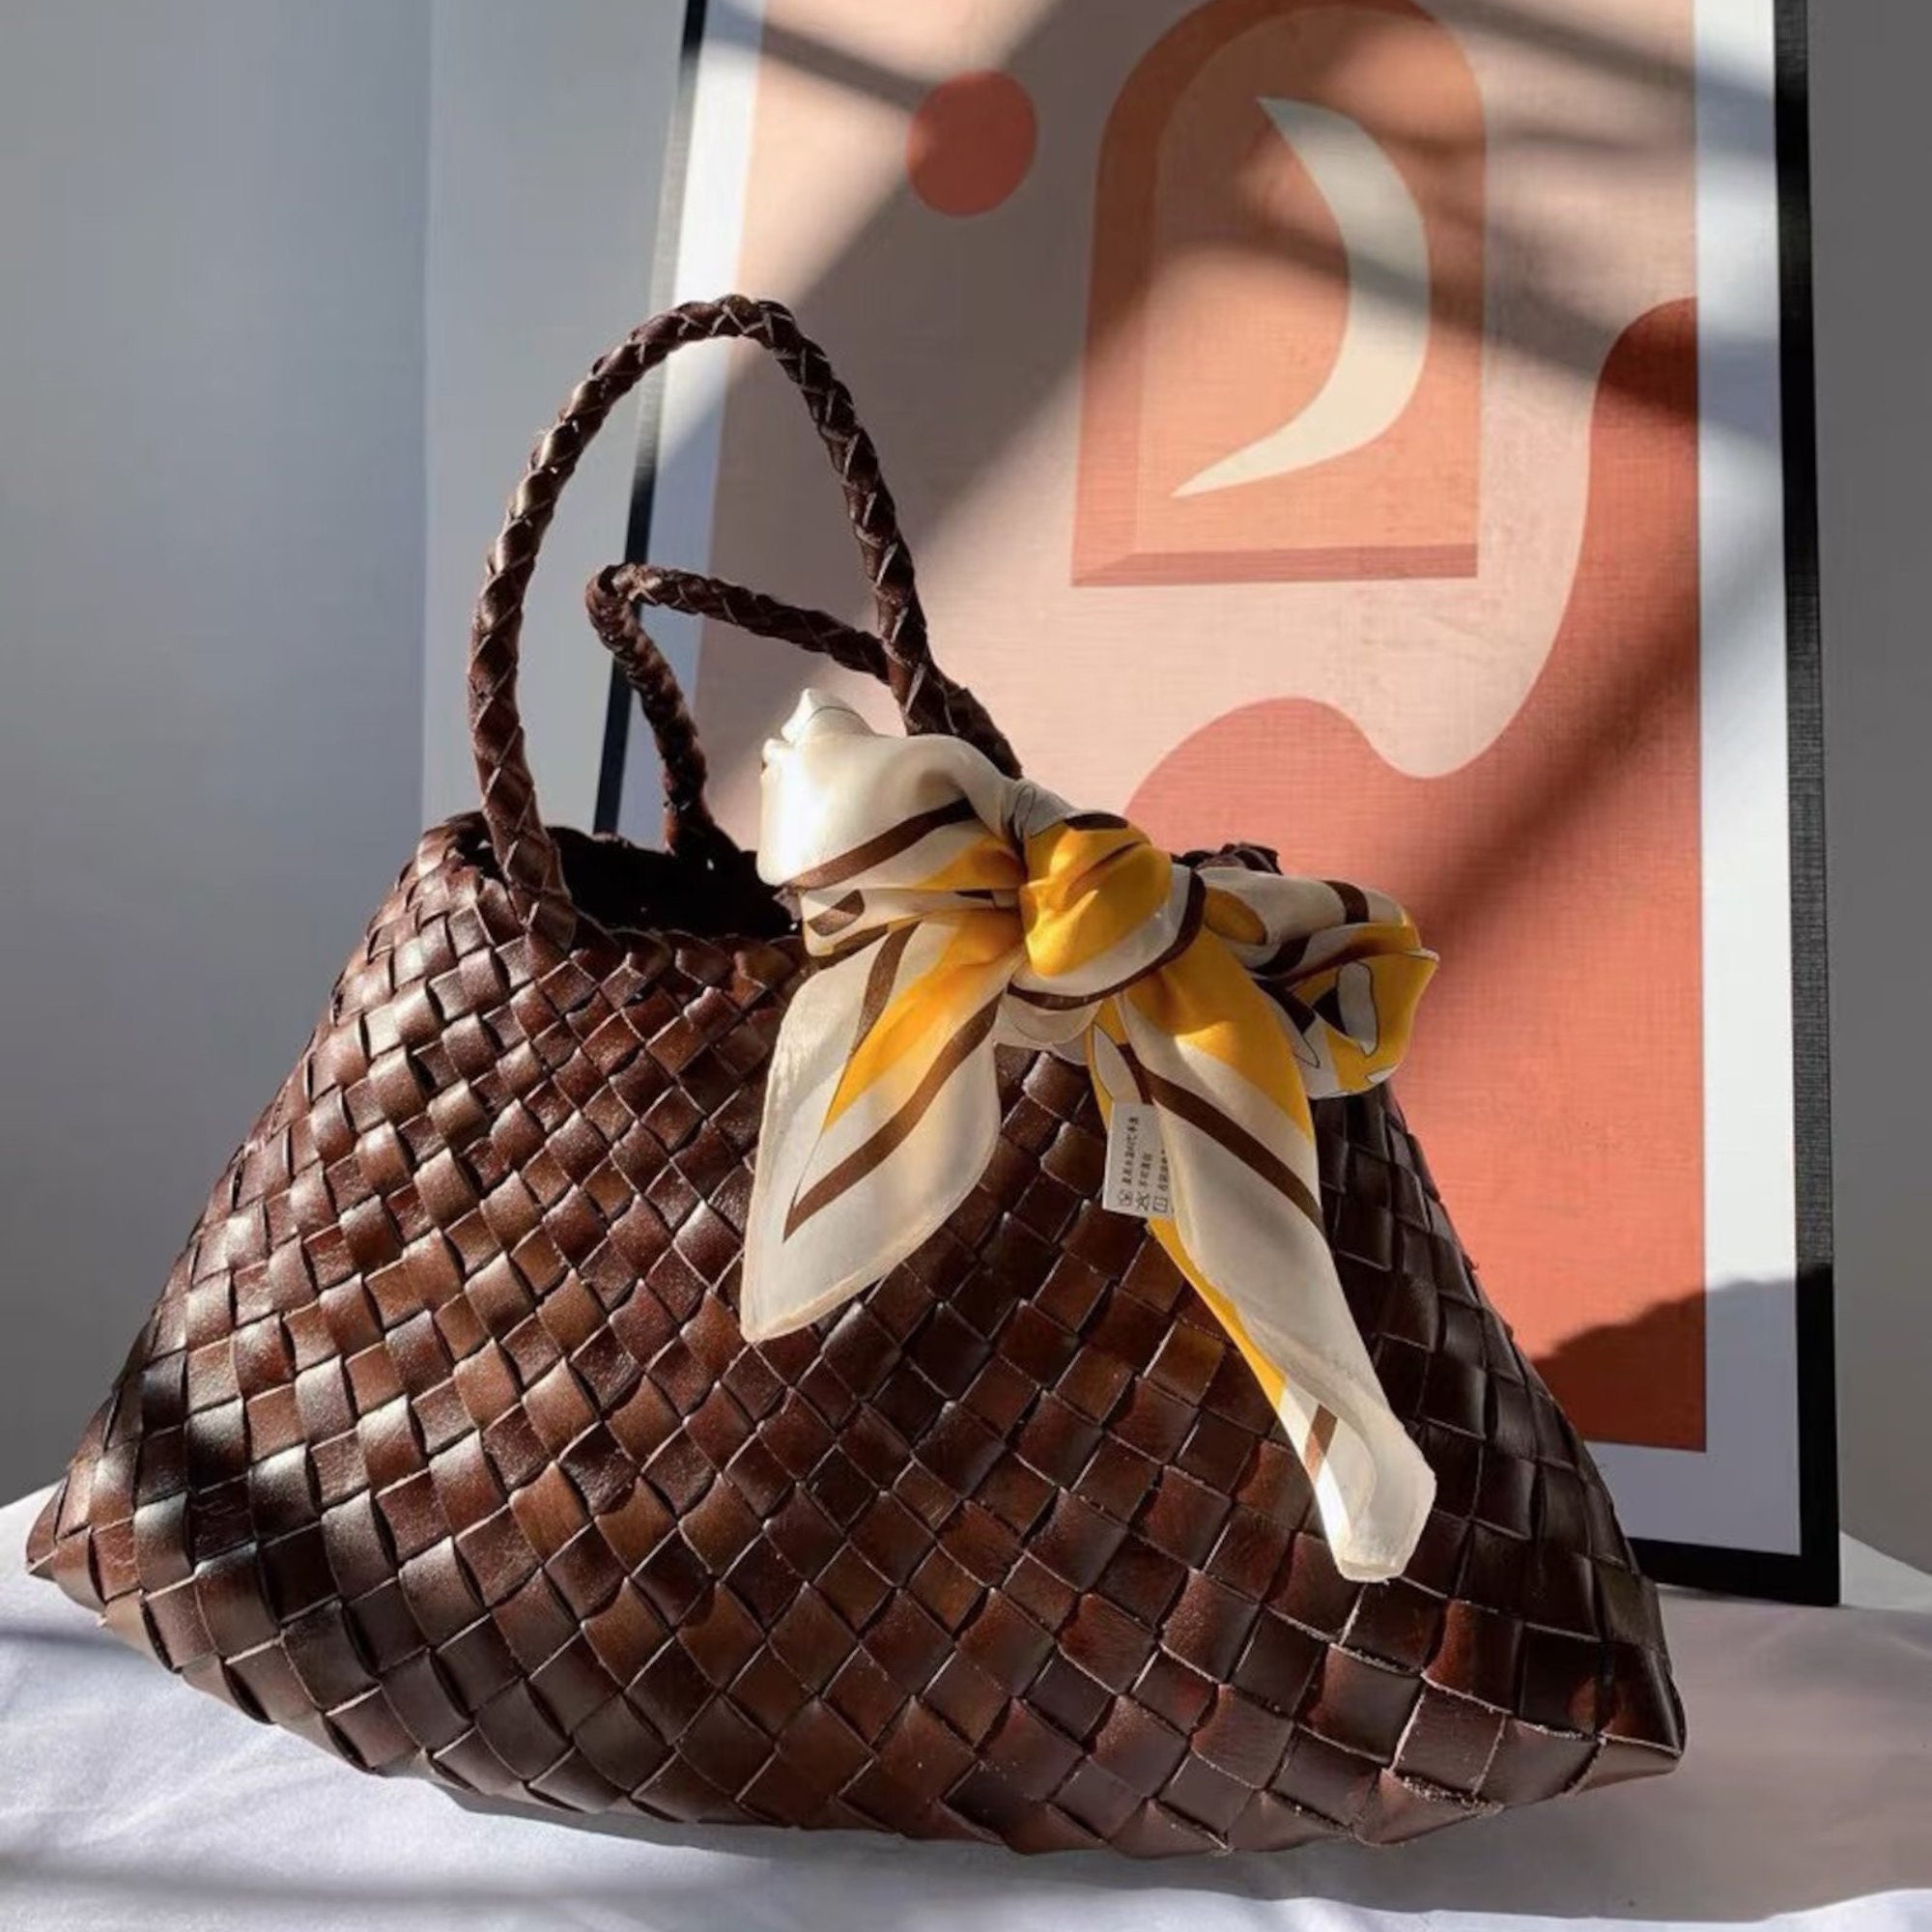 New MENOTTI Firenze Soft Woven Weave Leather Basket Handbag, Shoulder Bag